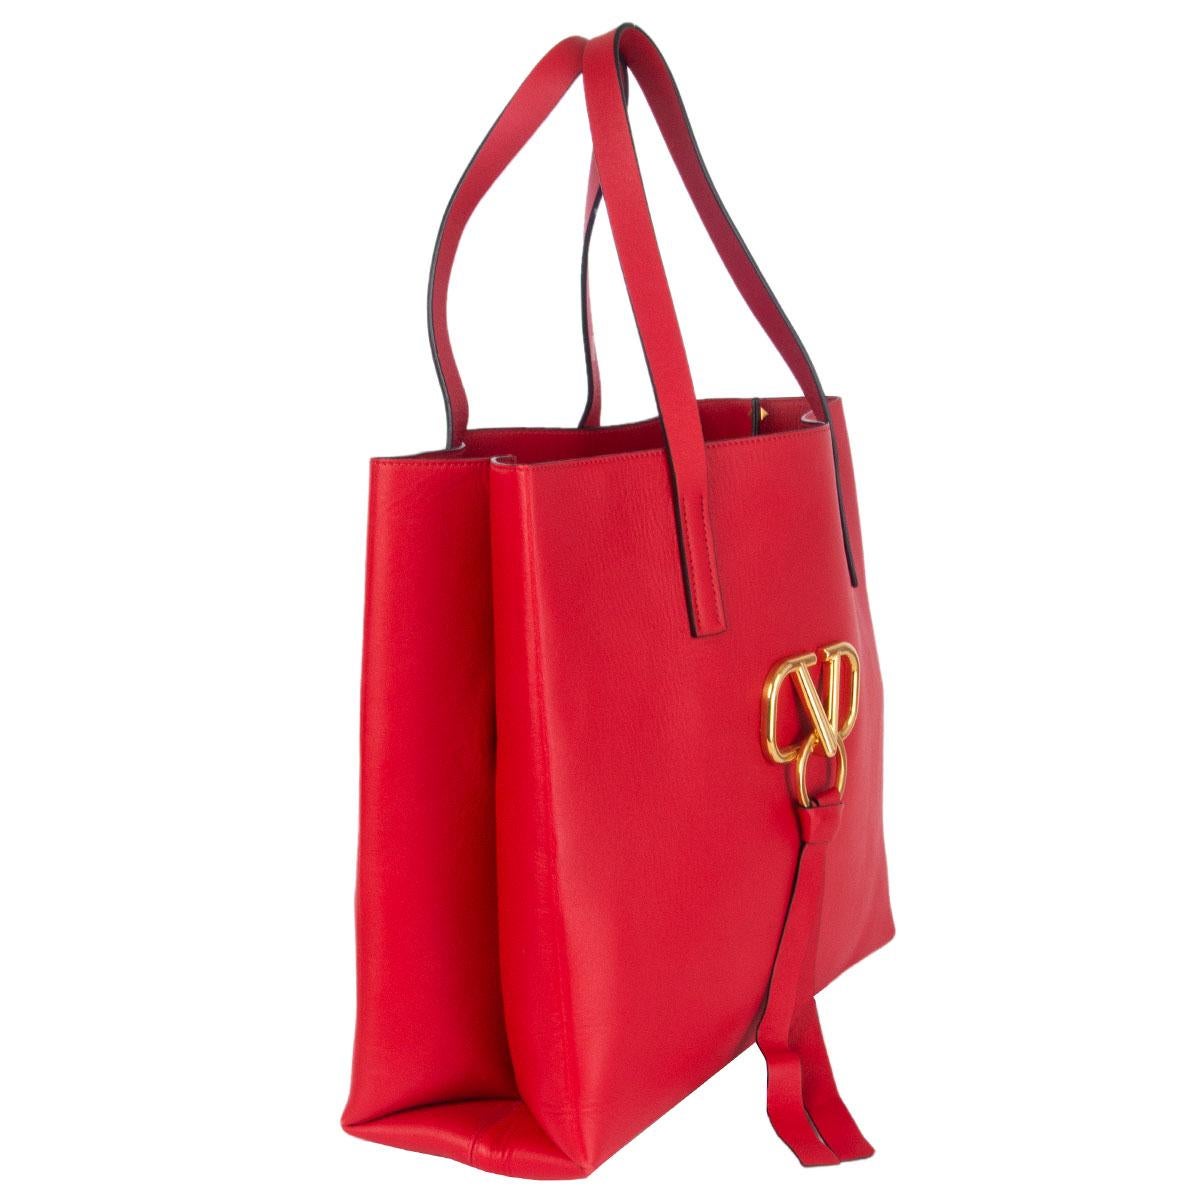 Totes bags Valentino Red - Red Signs shopping bag - QQ0B0B02FRD0NI